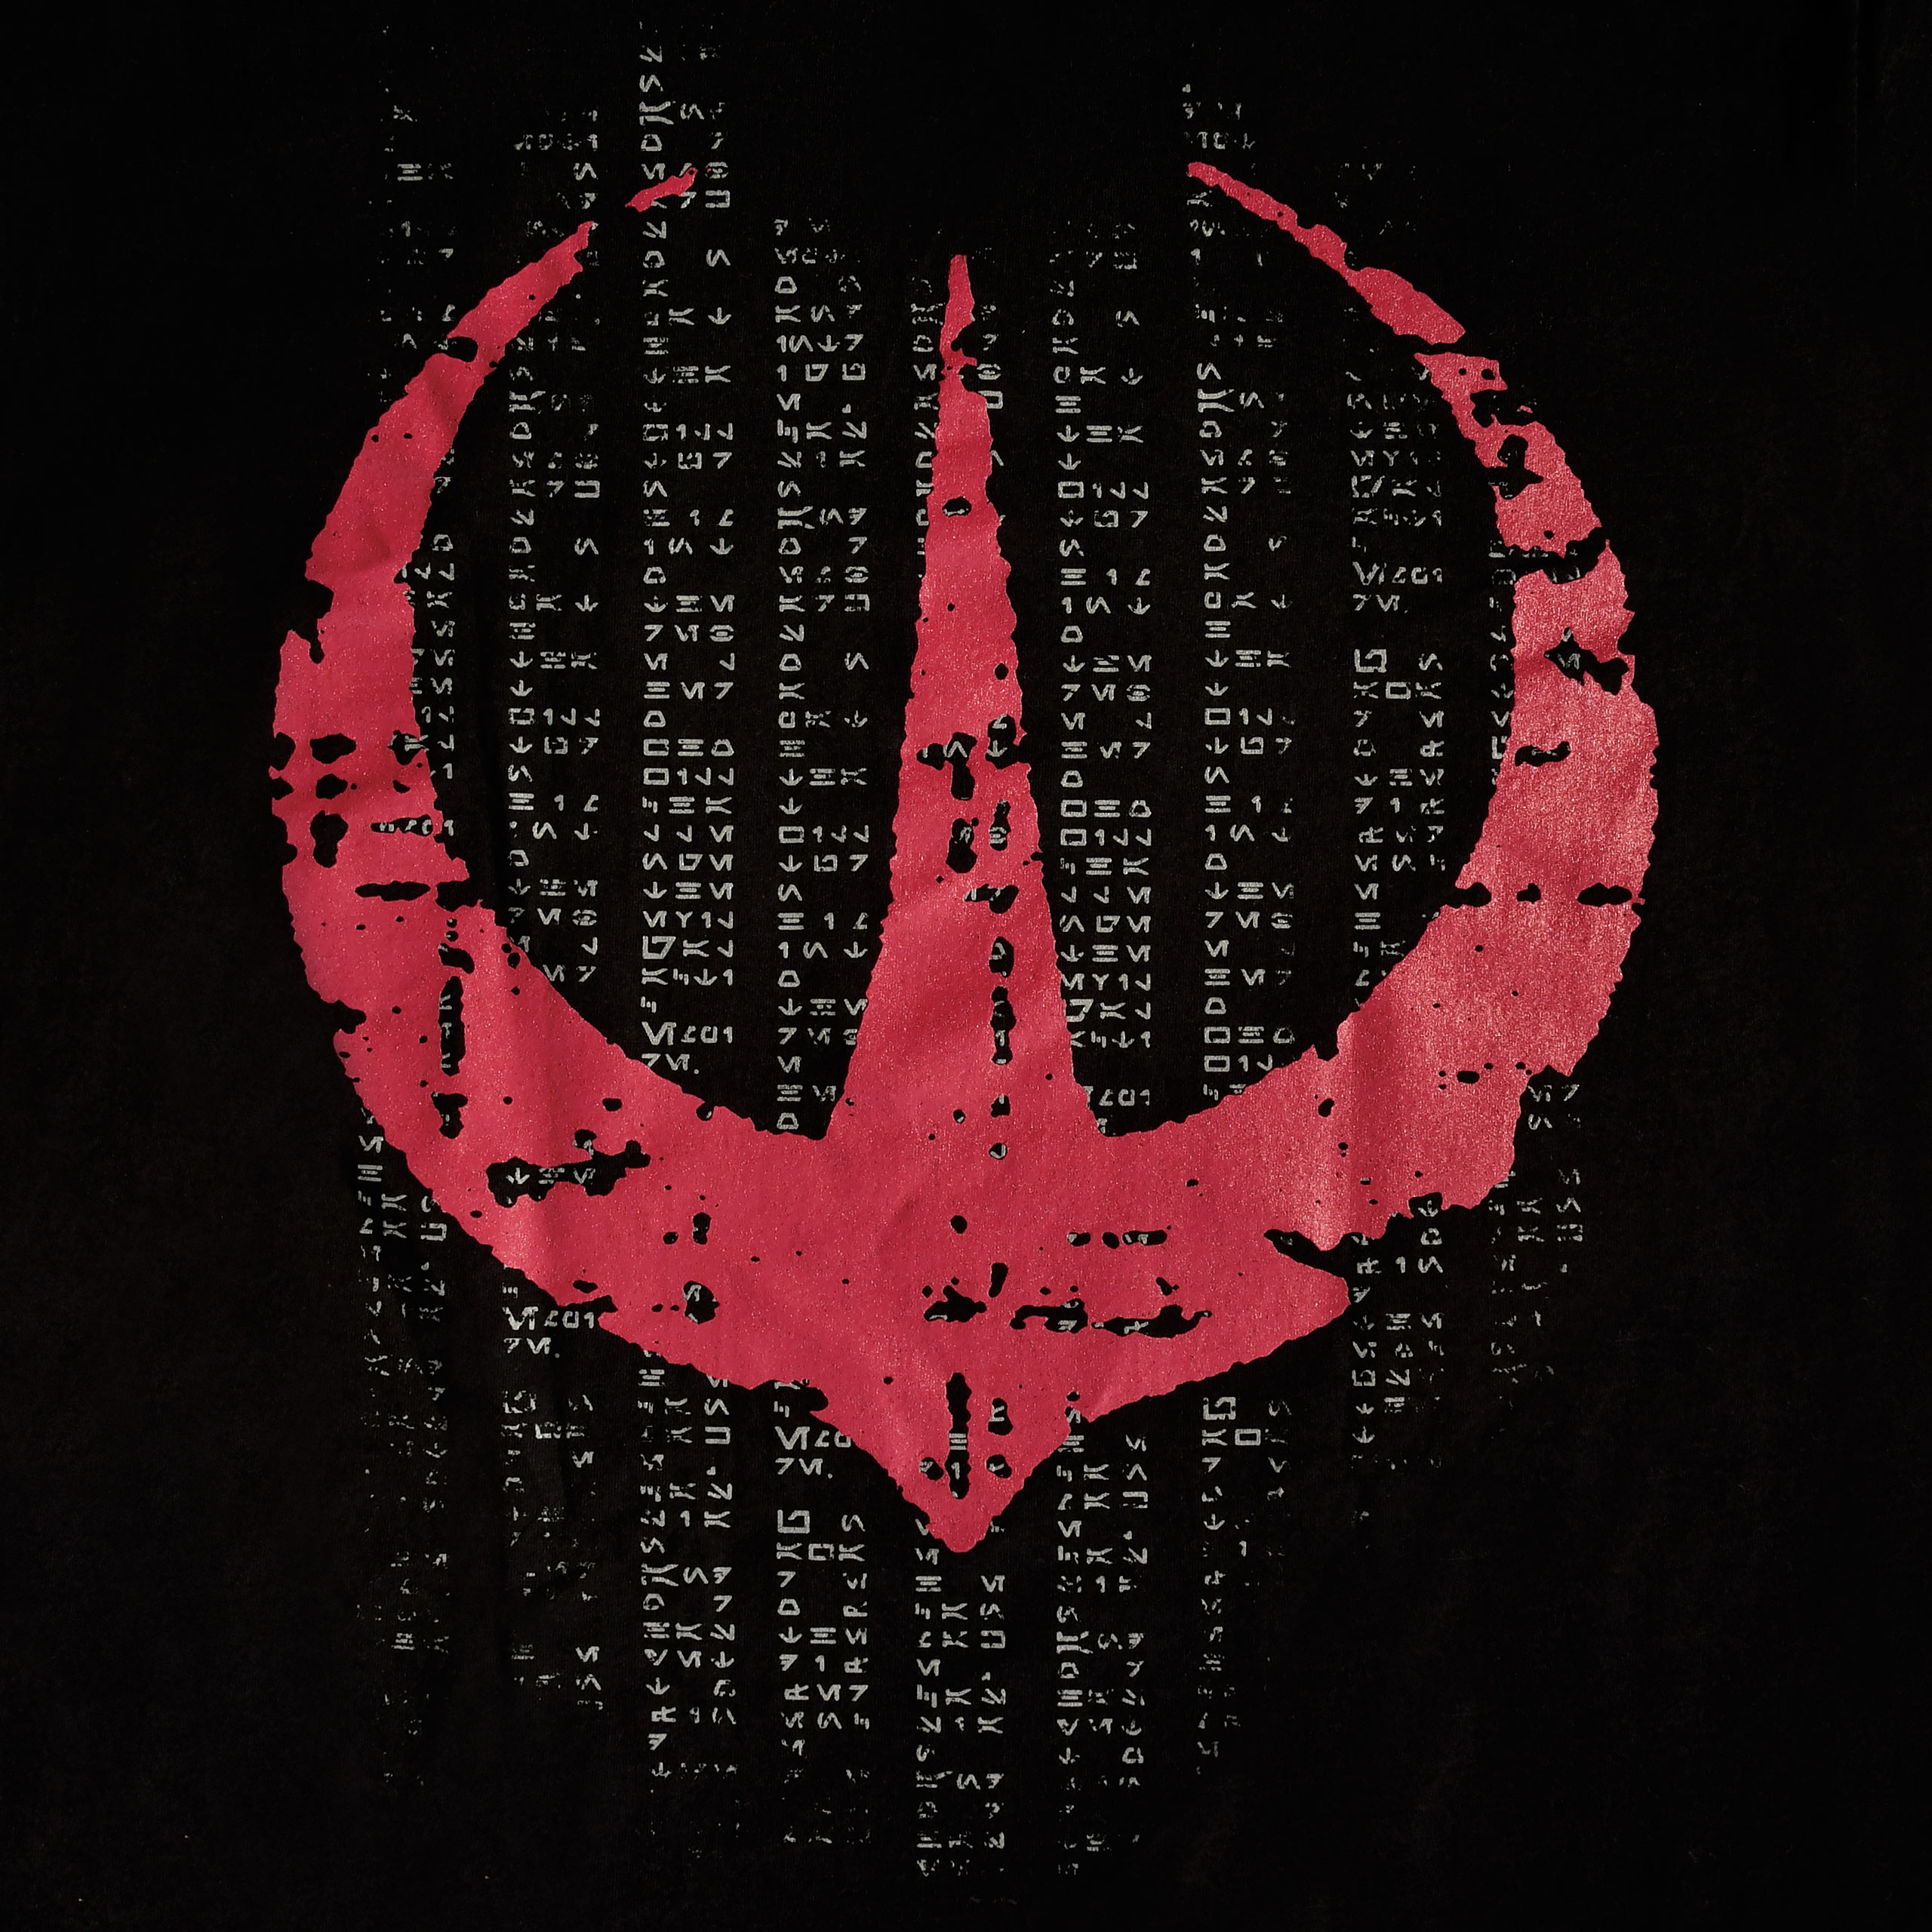 Star Wars - Andor For The Rebellion T-Shirt black